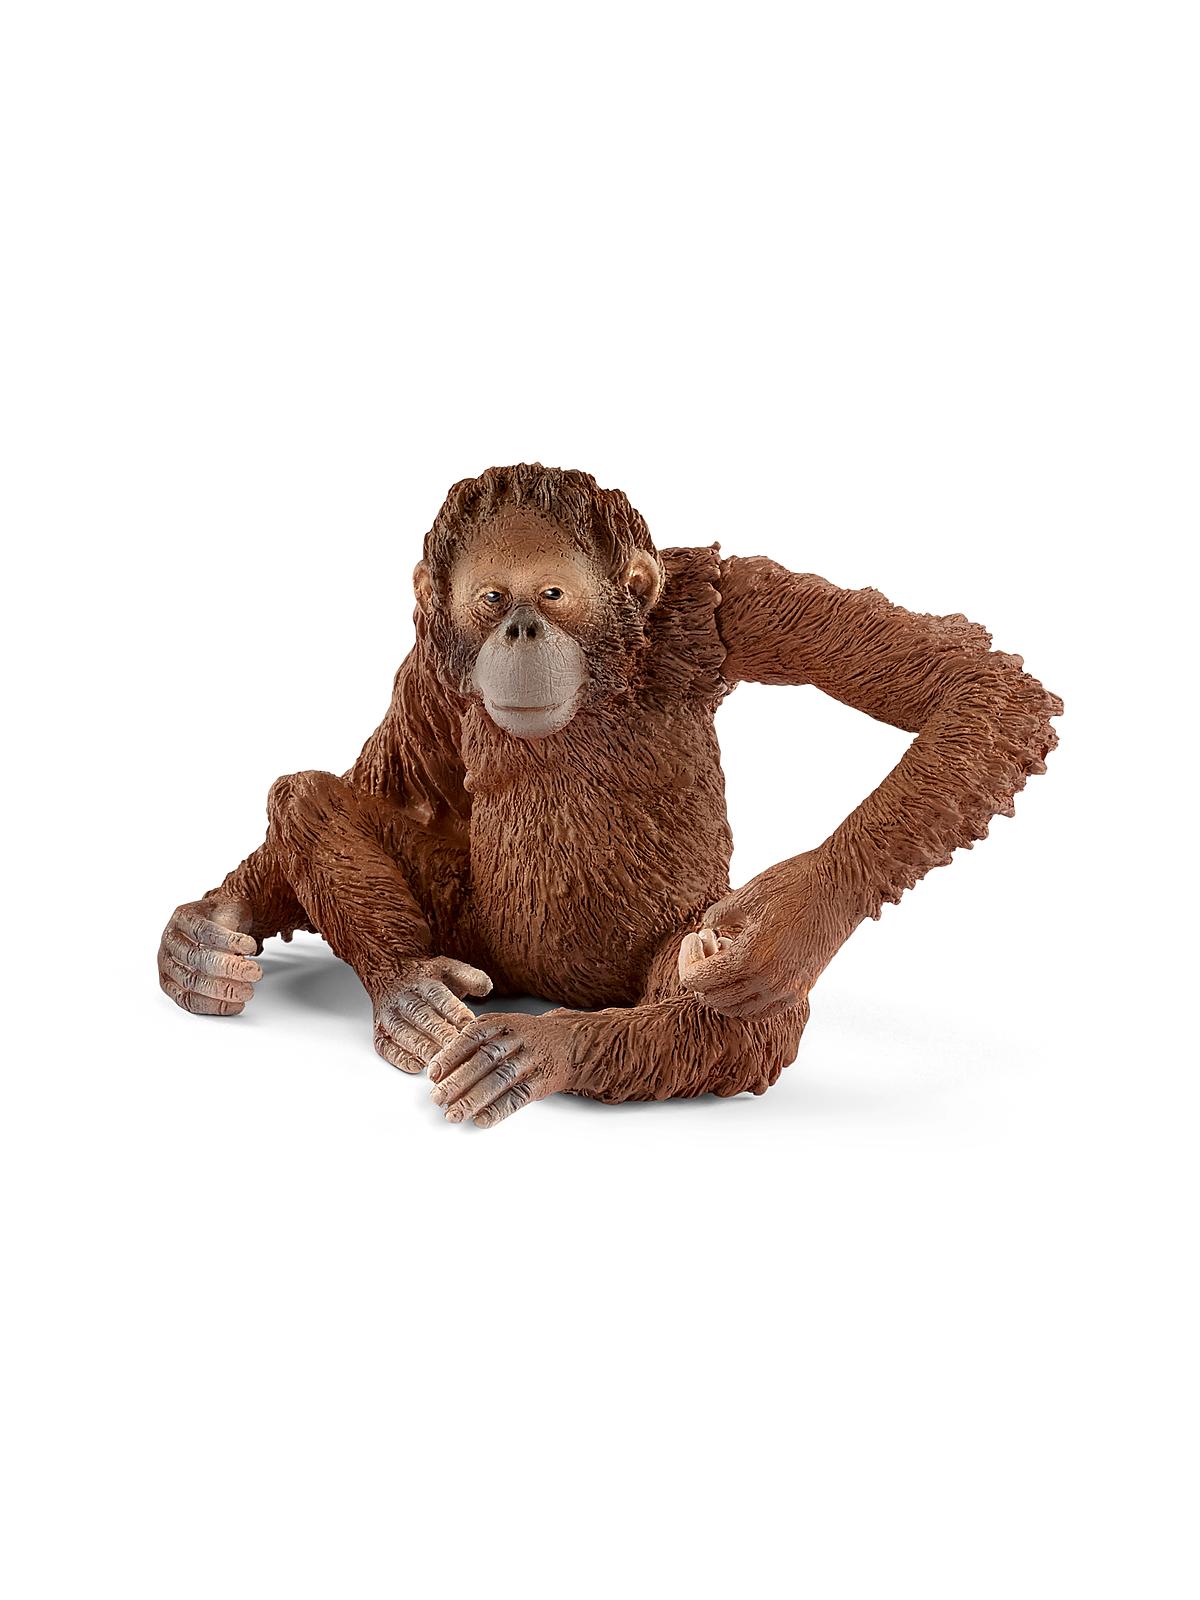 Wild Life Animals Orangutan Female